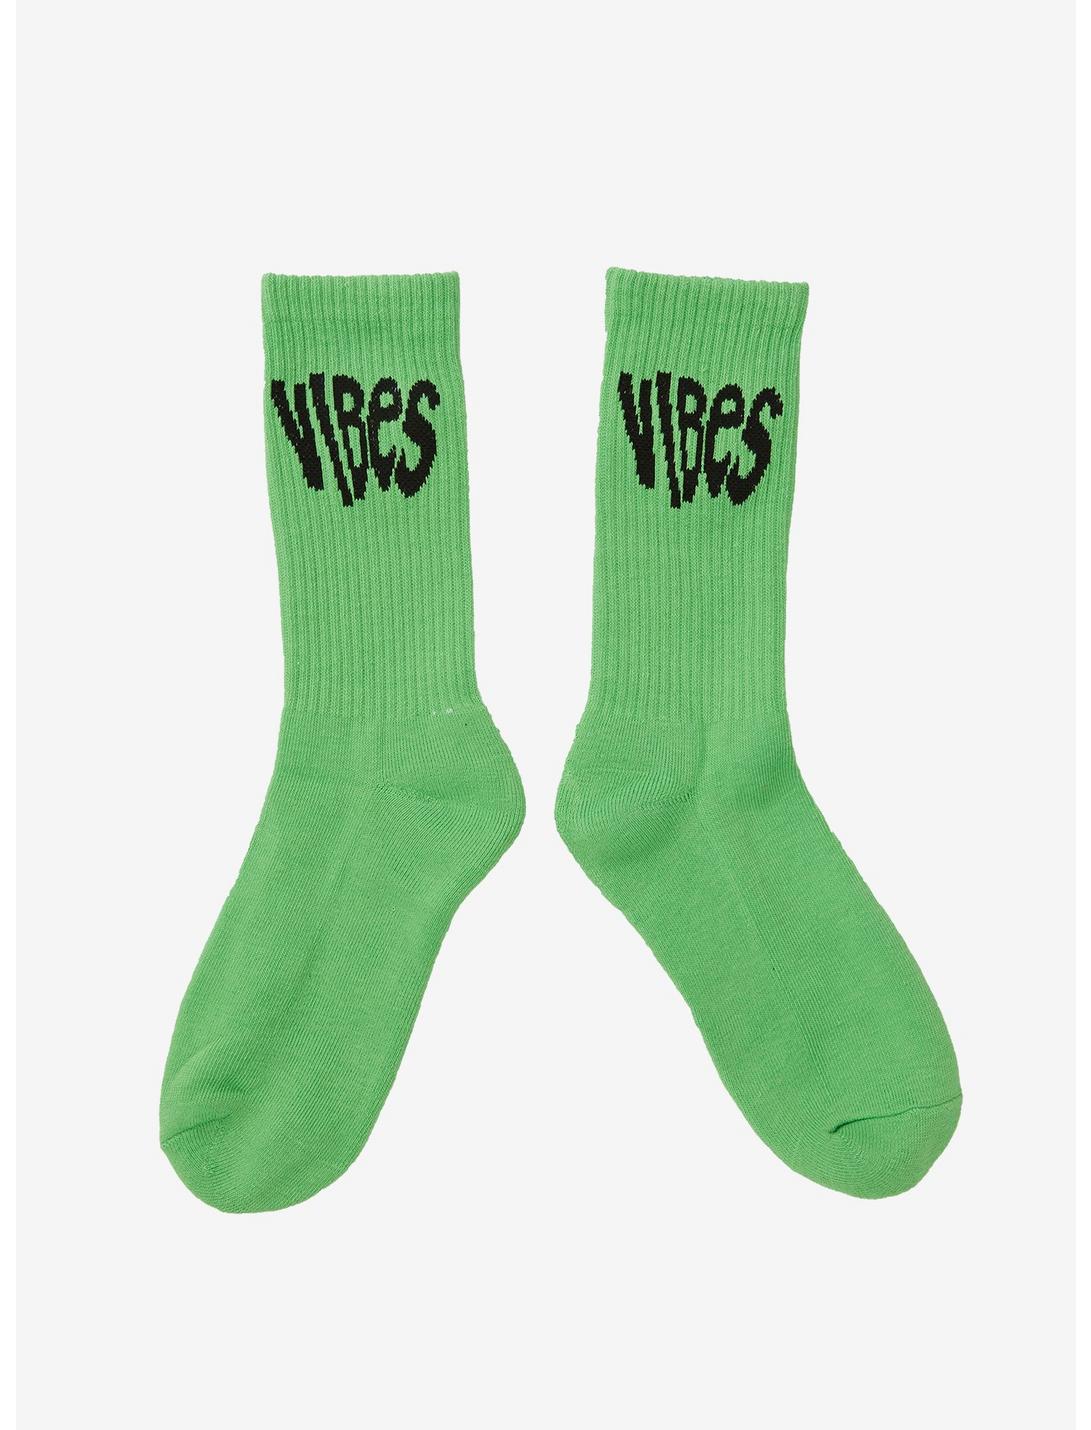 Vibes Neon Green Crew Socks, , hi-res